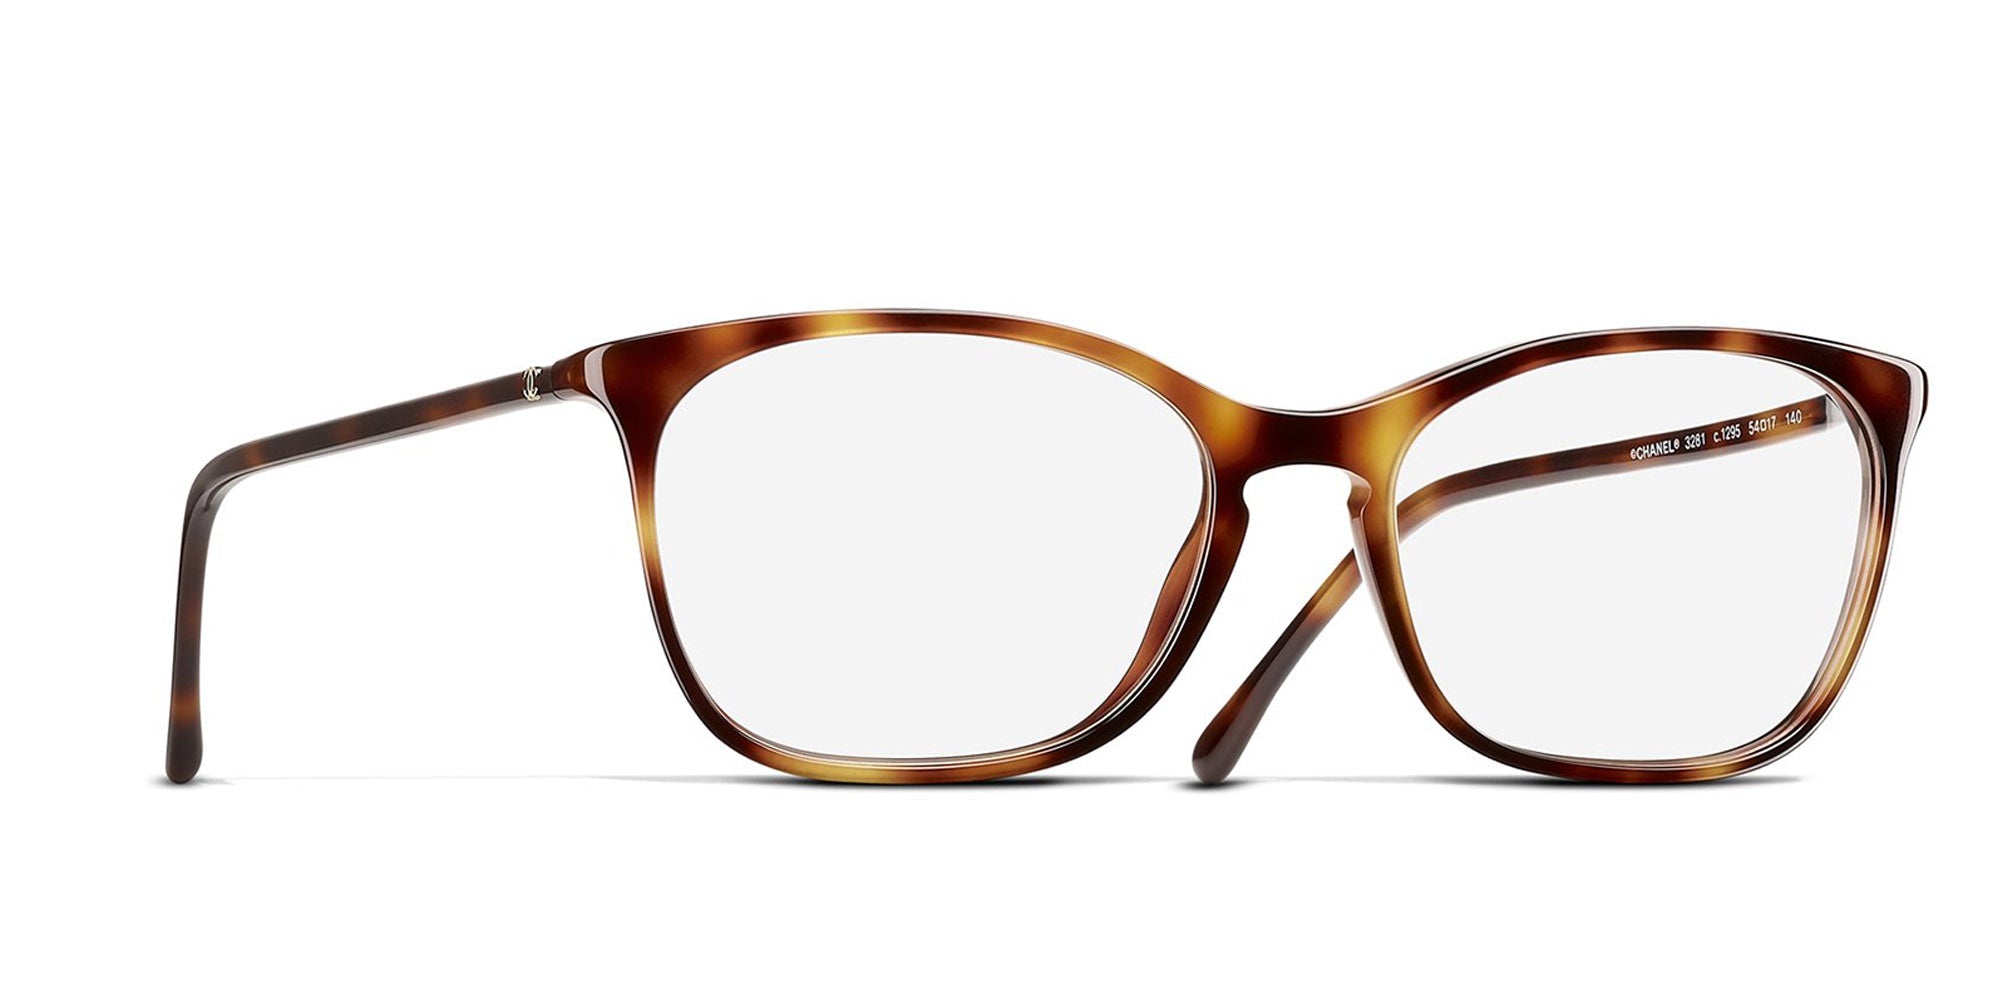 Chanel 3215 Eyeglasses